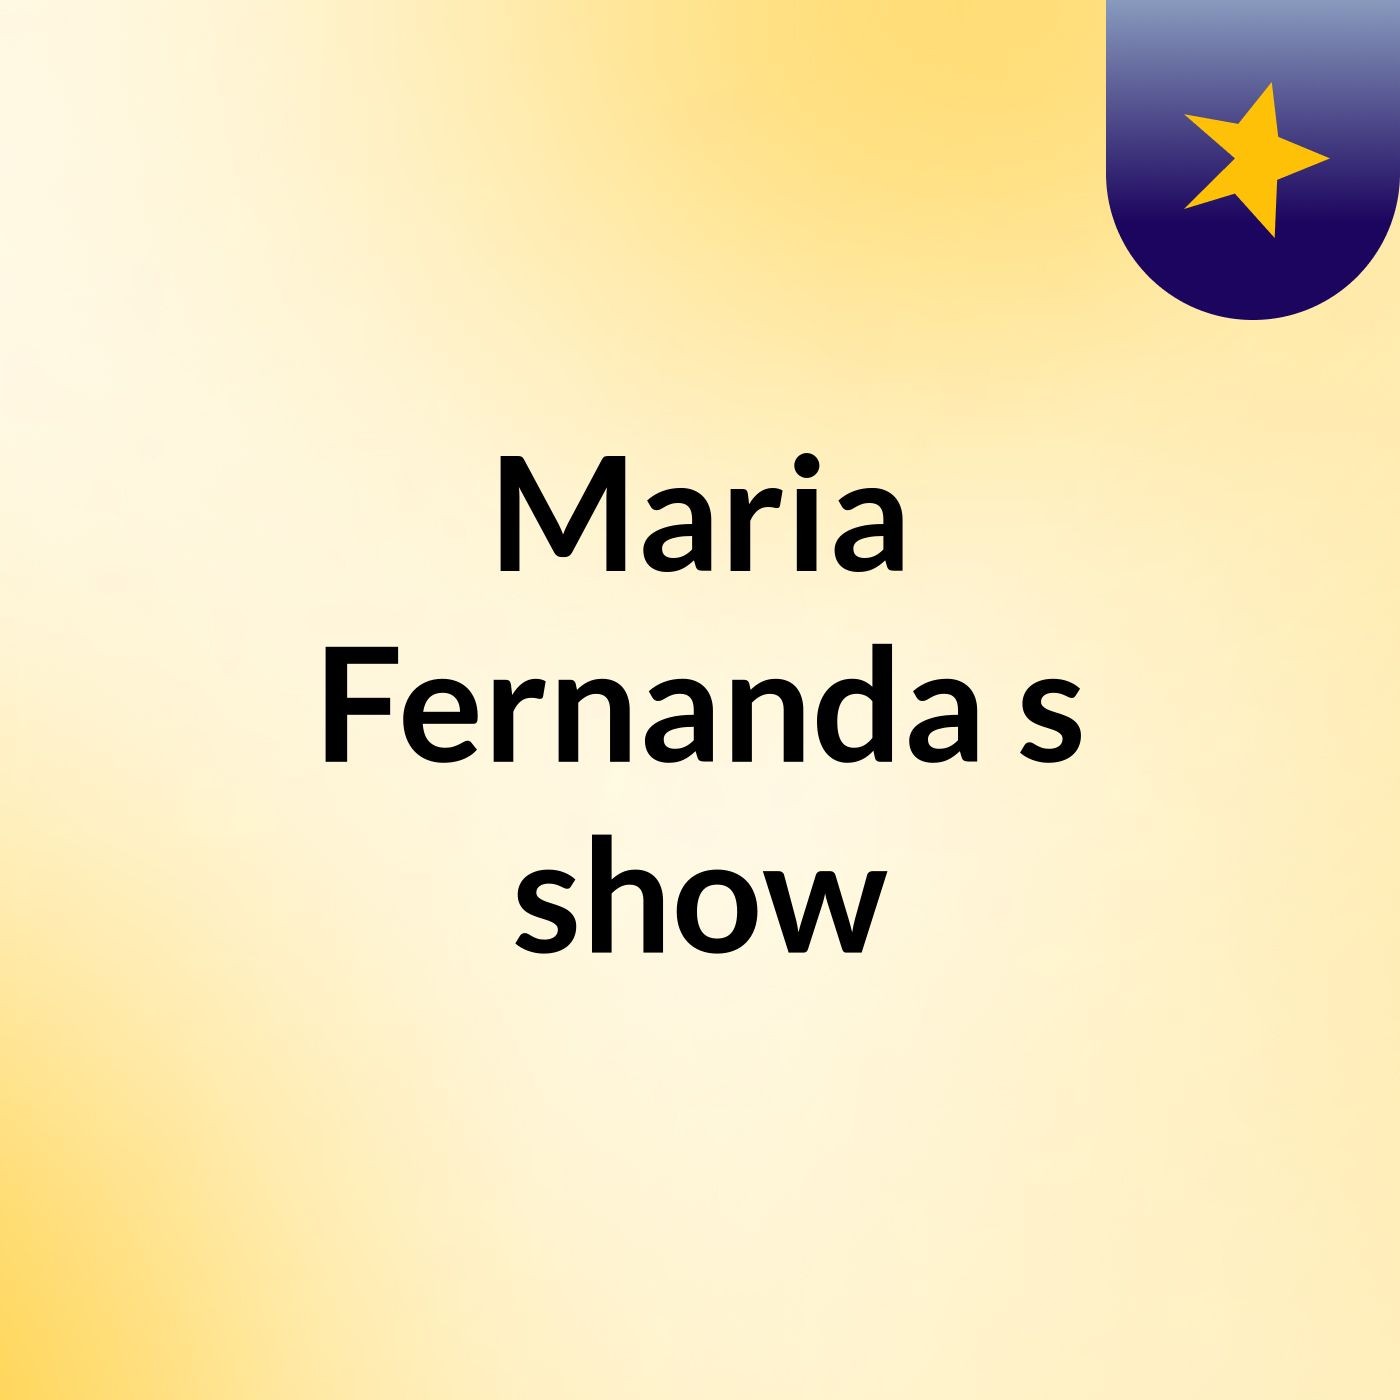 Maria Fernanda's show